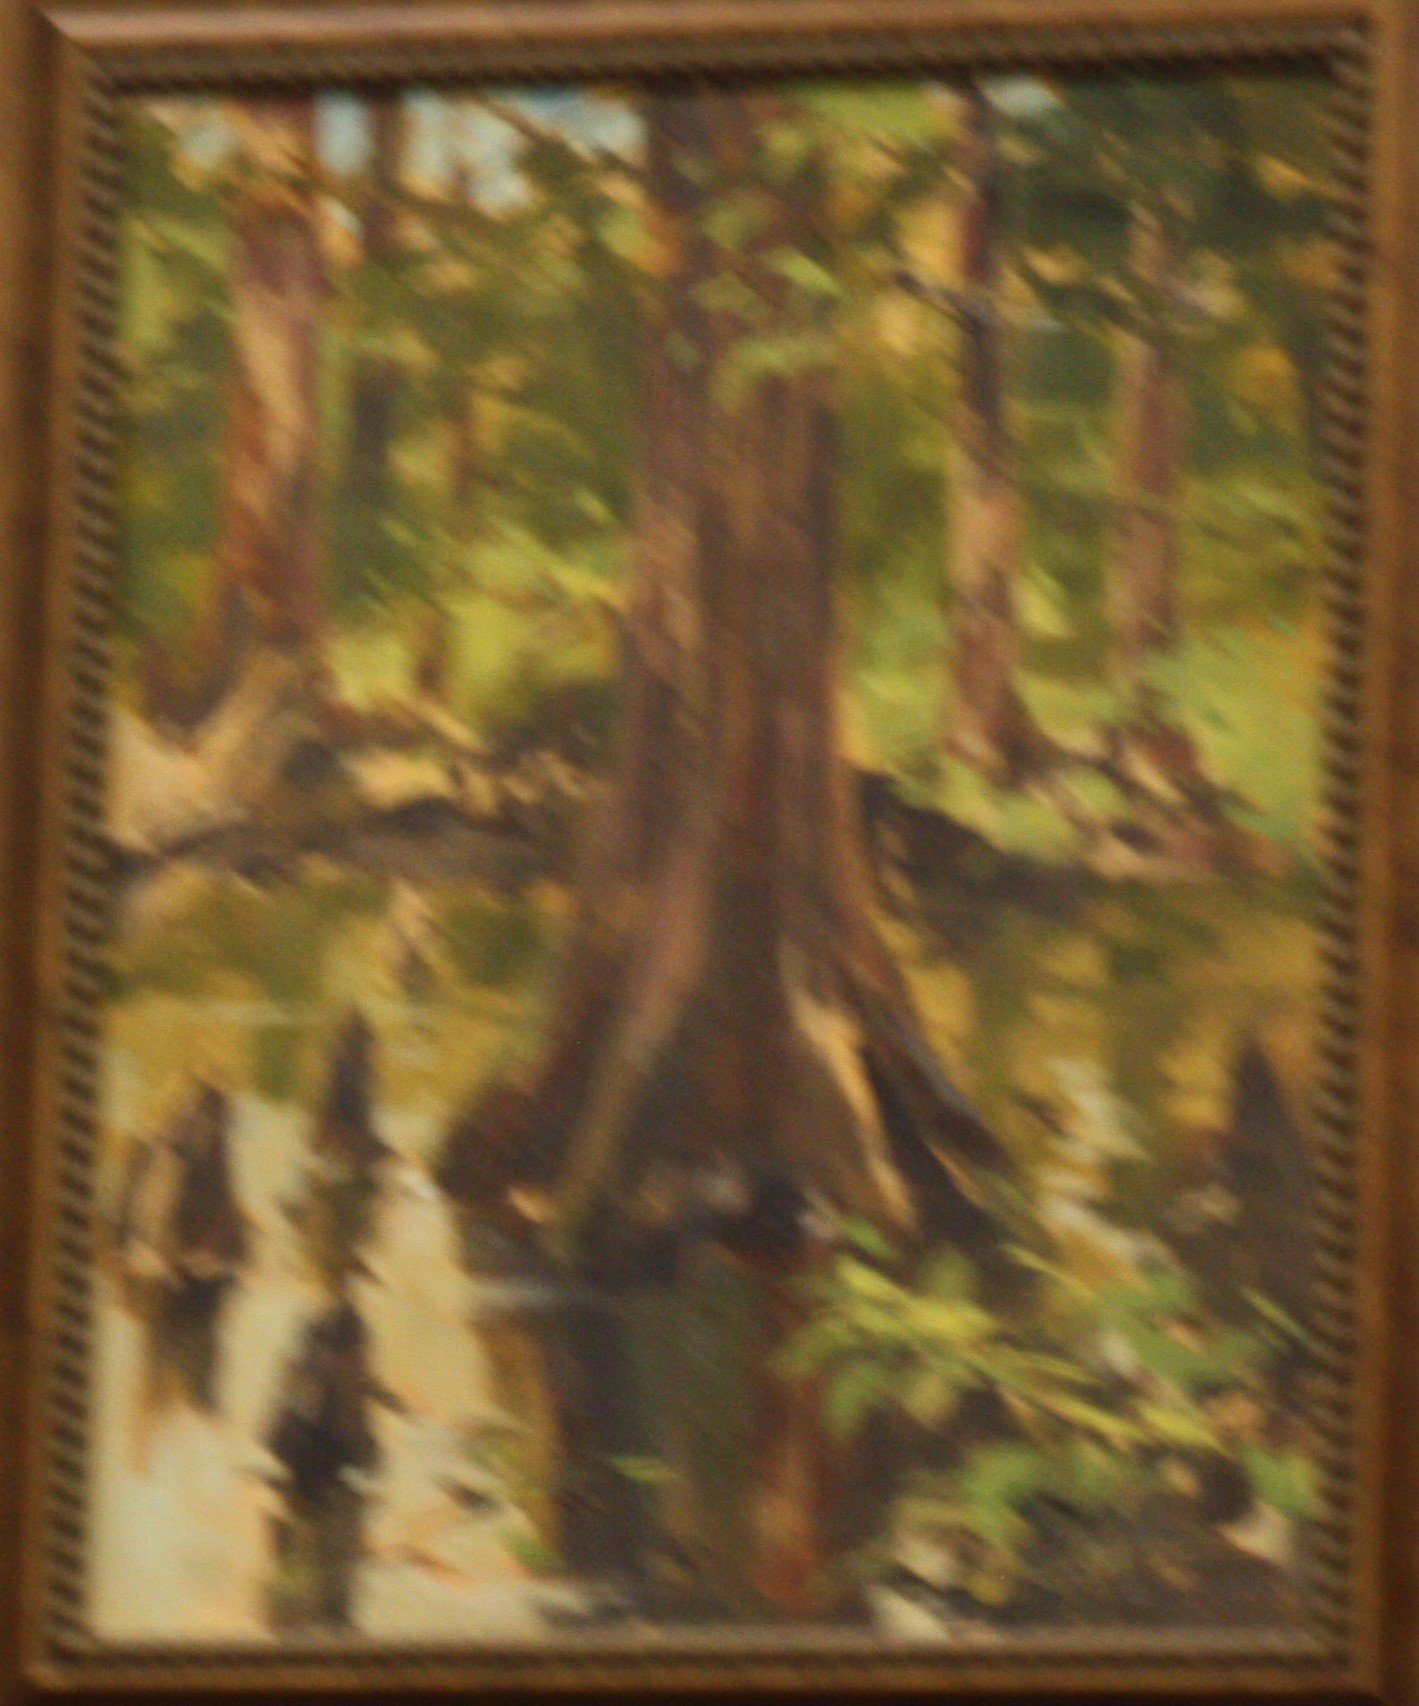 SECOND PLACE - "Pocomoke Cypress" Oil by Carla Huber